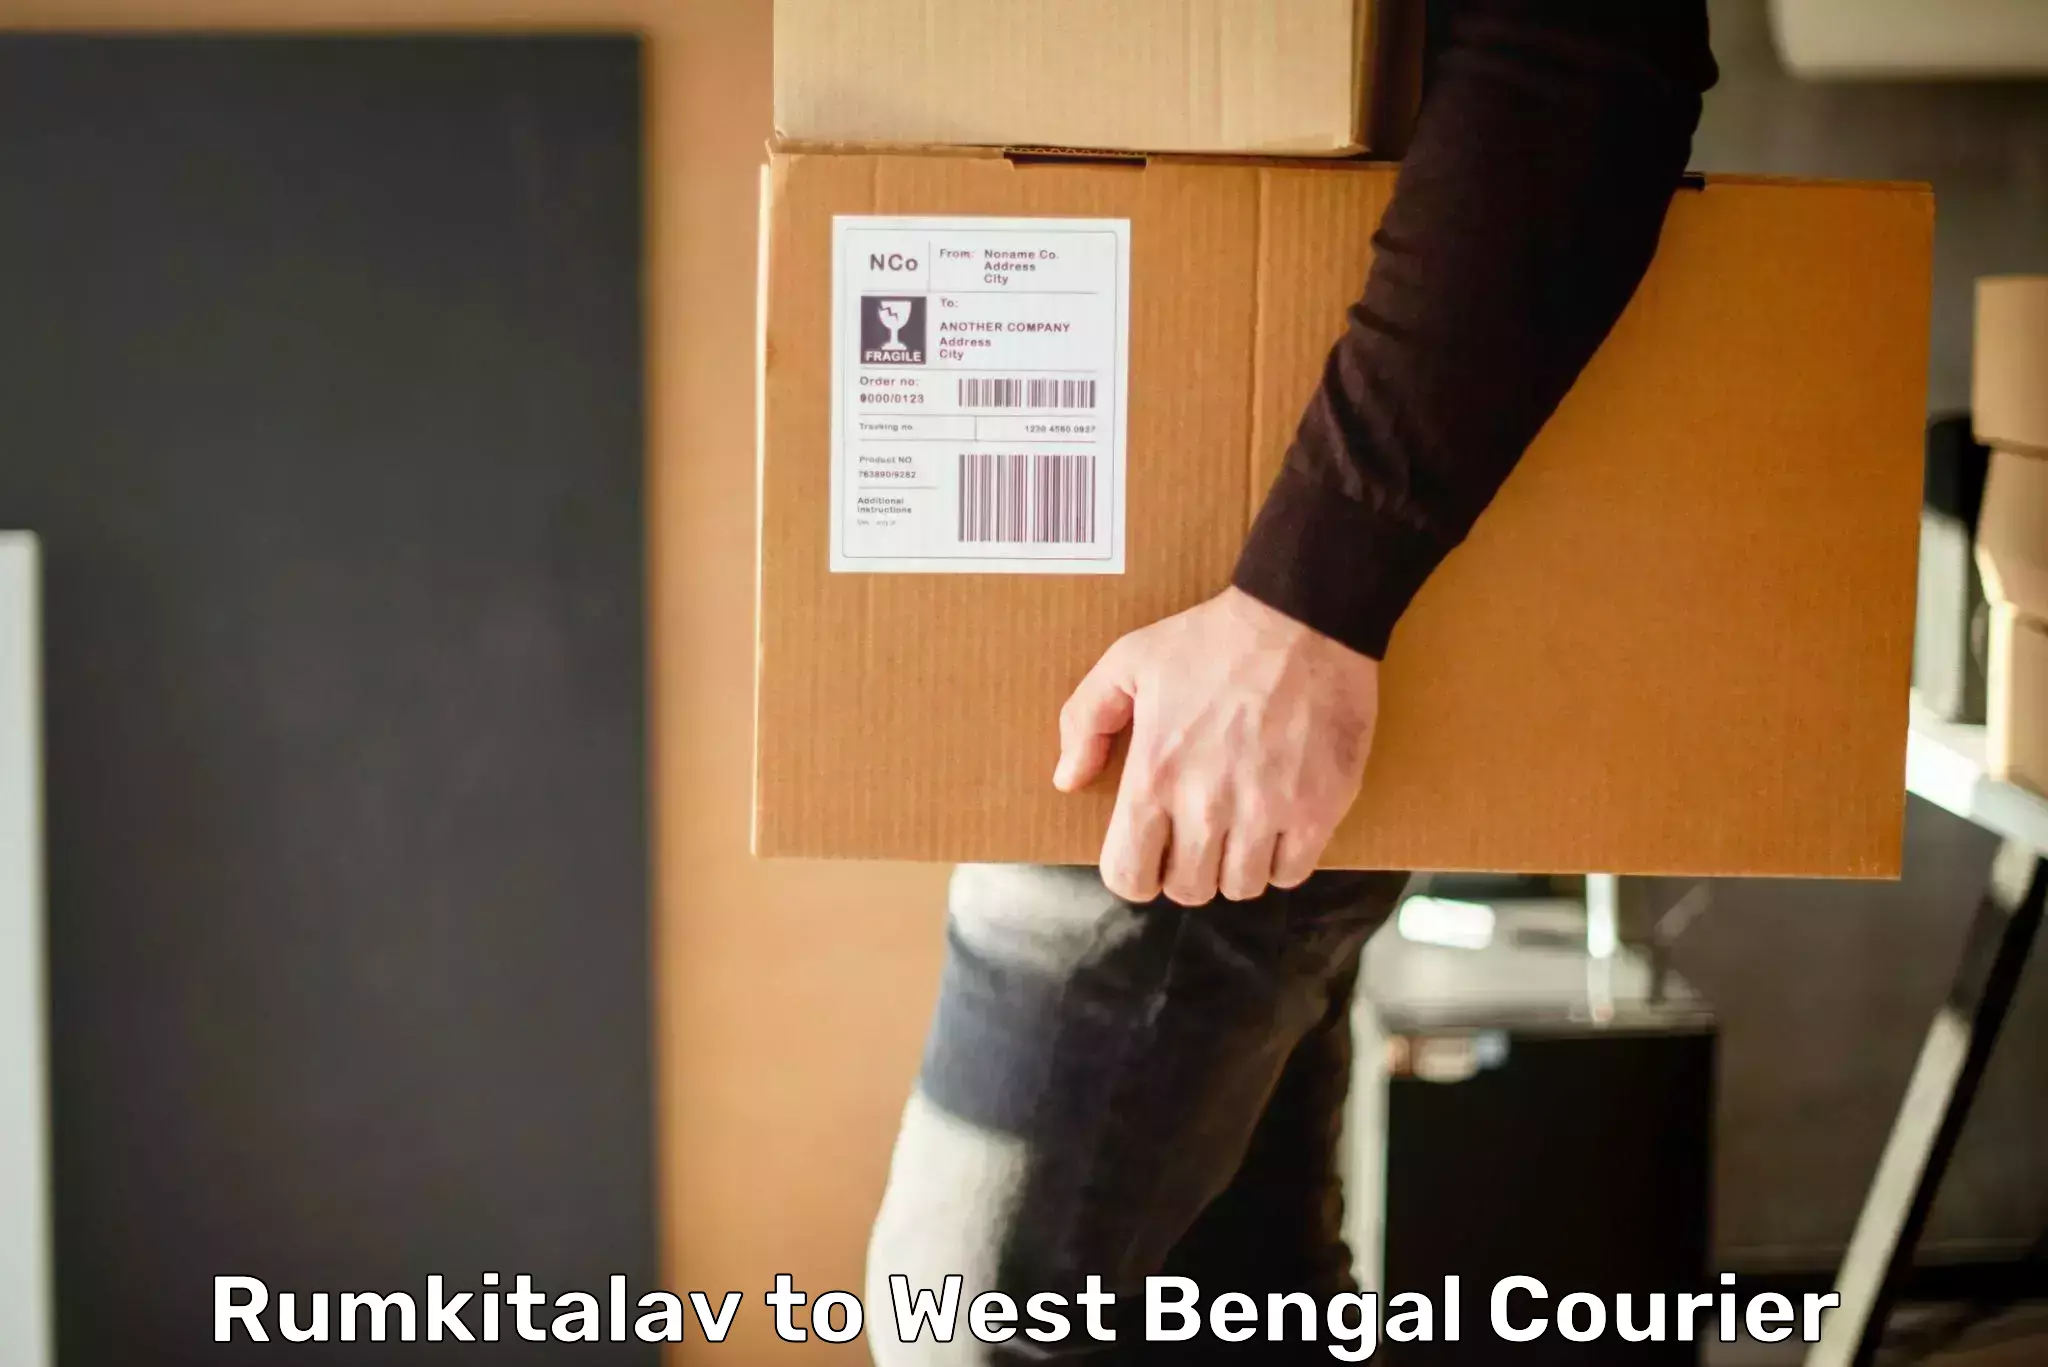 Efficient order fulfillment Rumkitalav to West Bengal